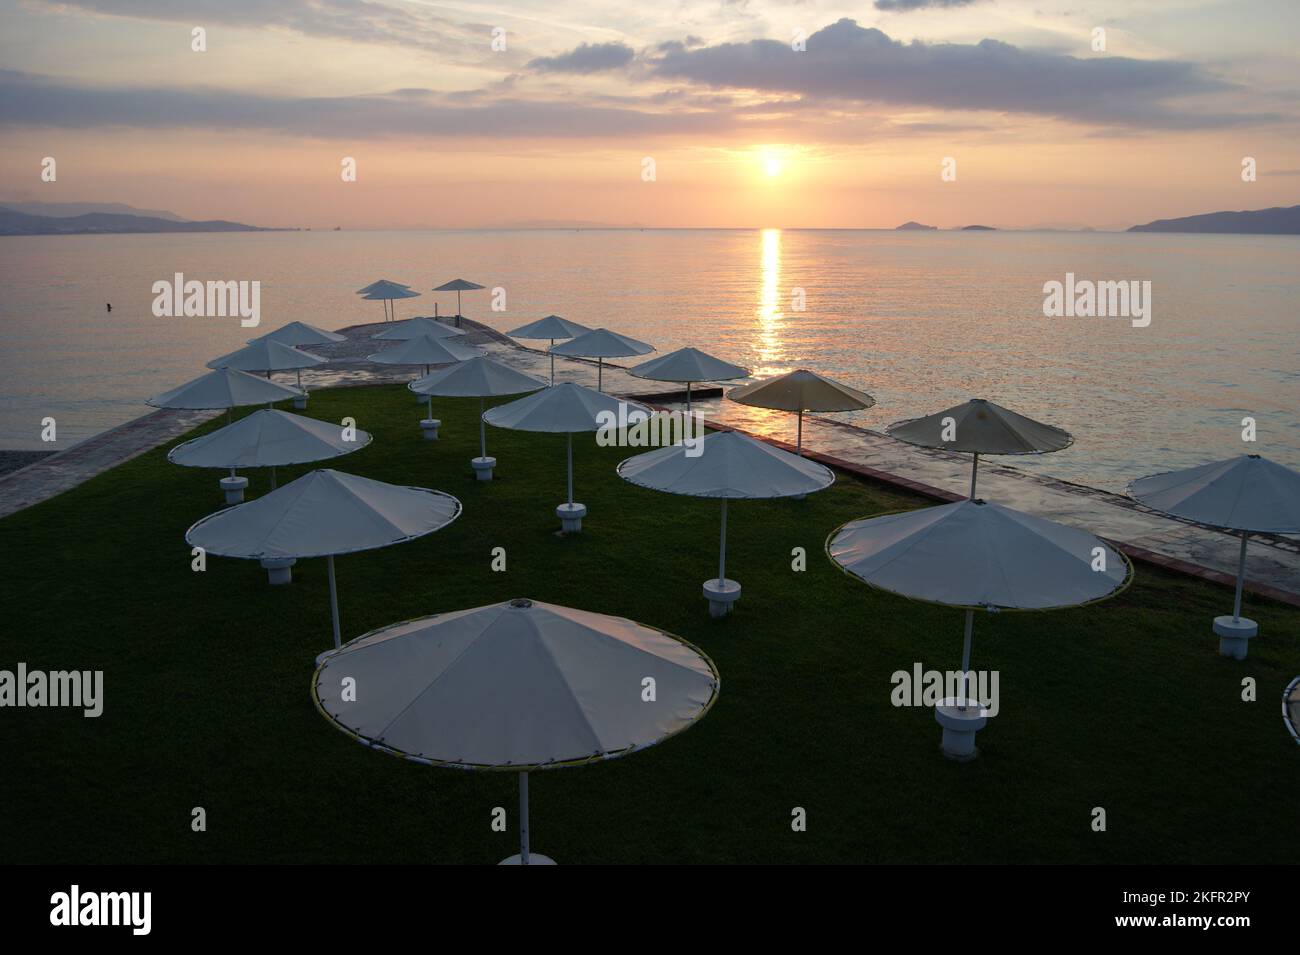 Beach umbrellas, view of the sun setting in the Aegean sea, orange sky background, at Kalamaki Beach, Saronic Gulf of the Aegean, Isthmia, Greece Stock Photo